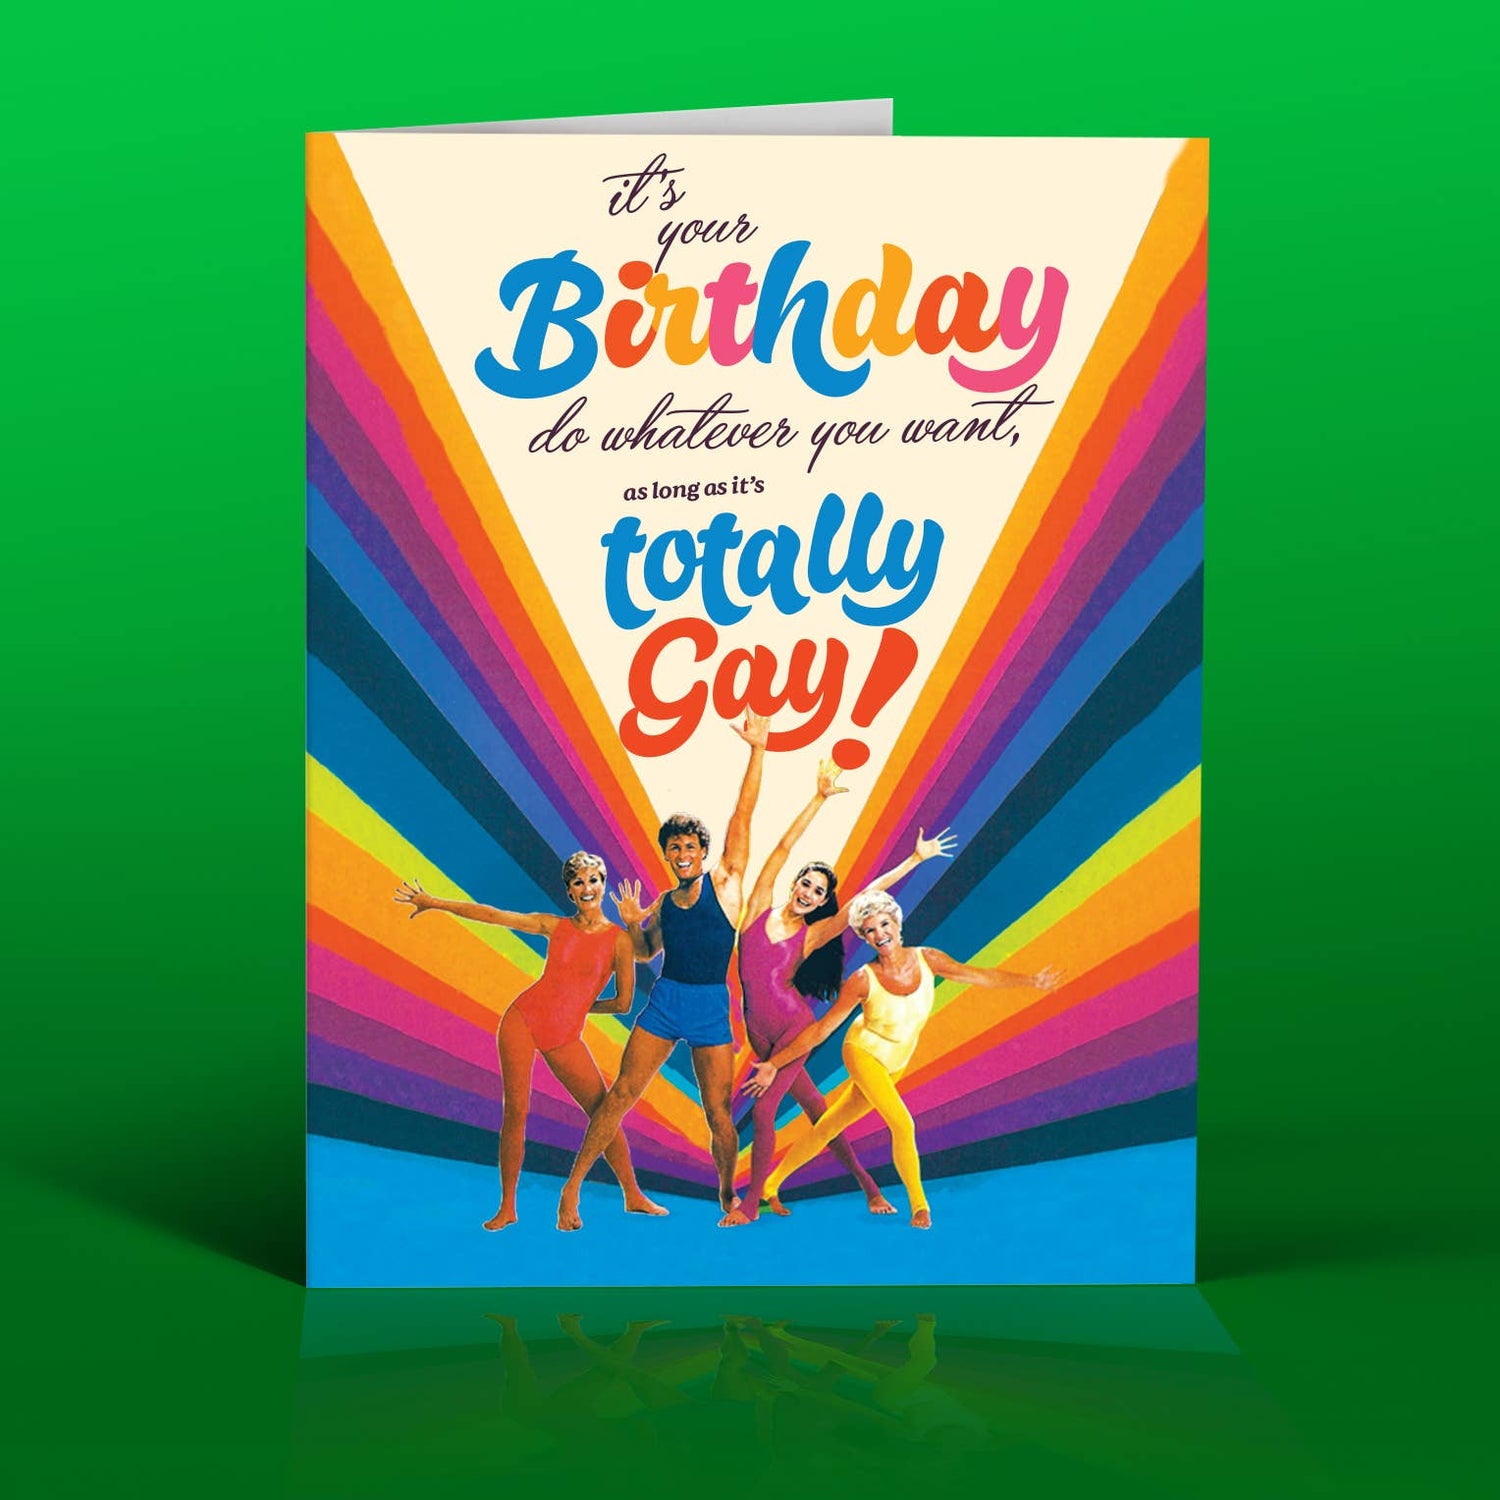 TOTALLY GAY! birthday card